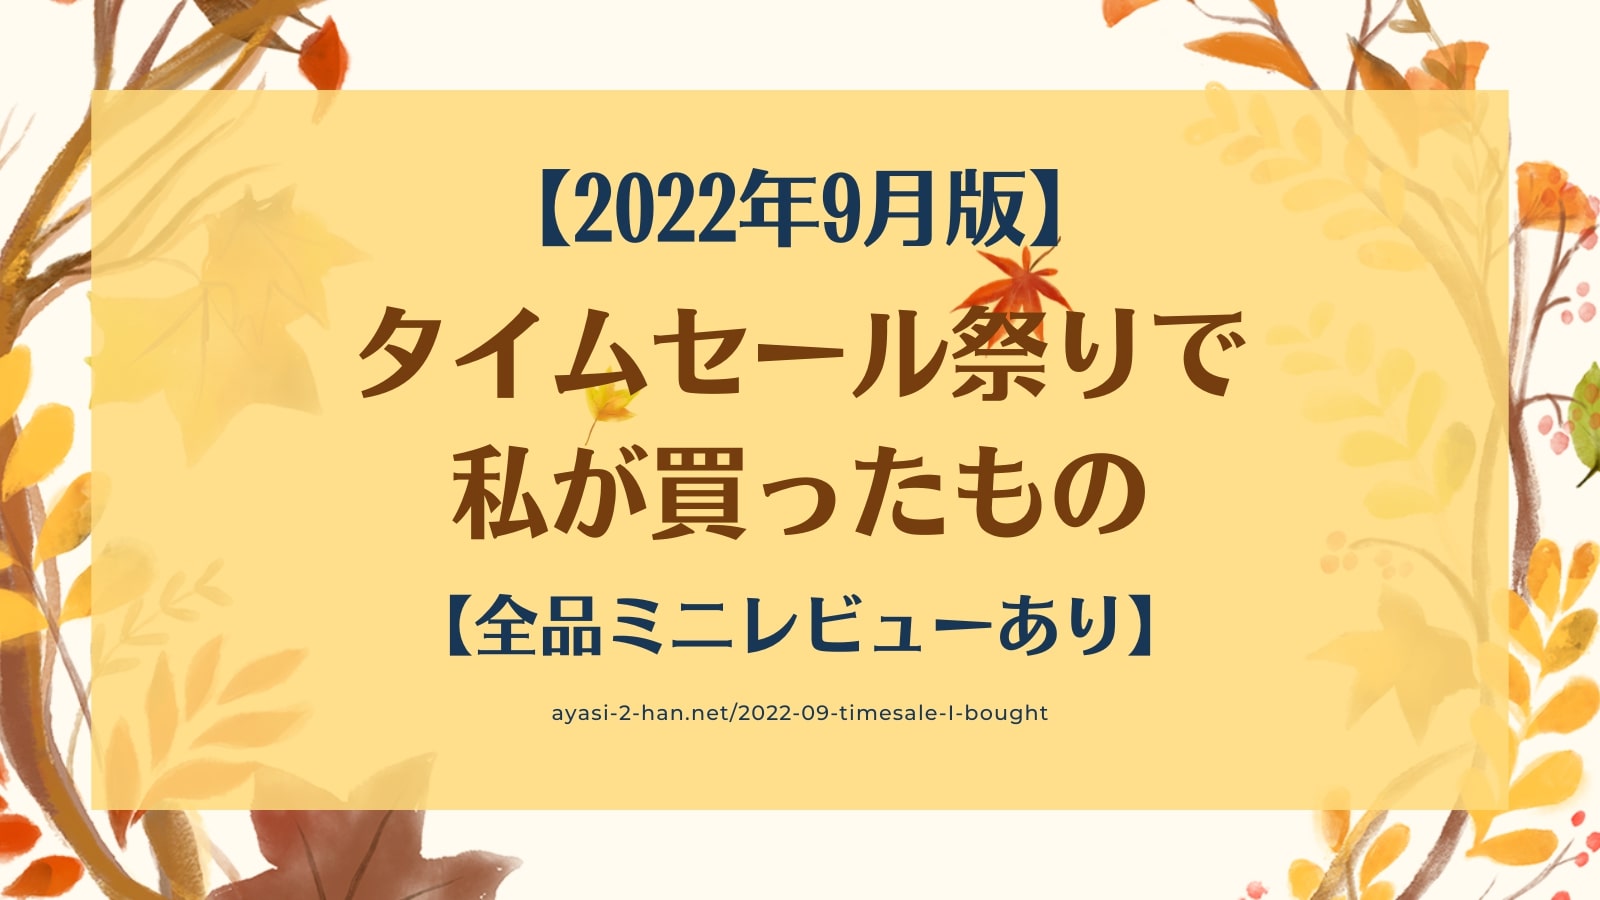 2022-09-I-bought_EyeCatch